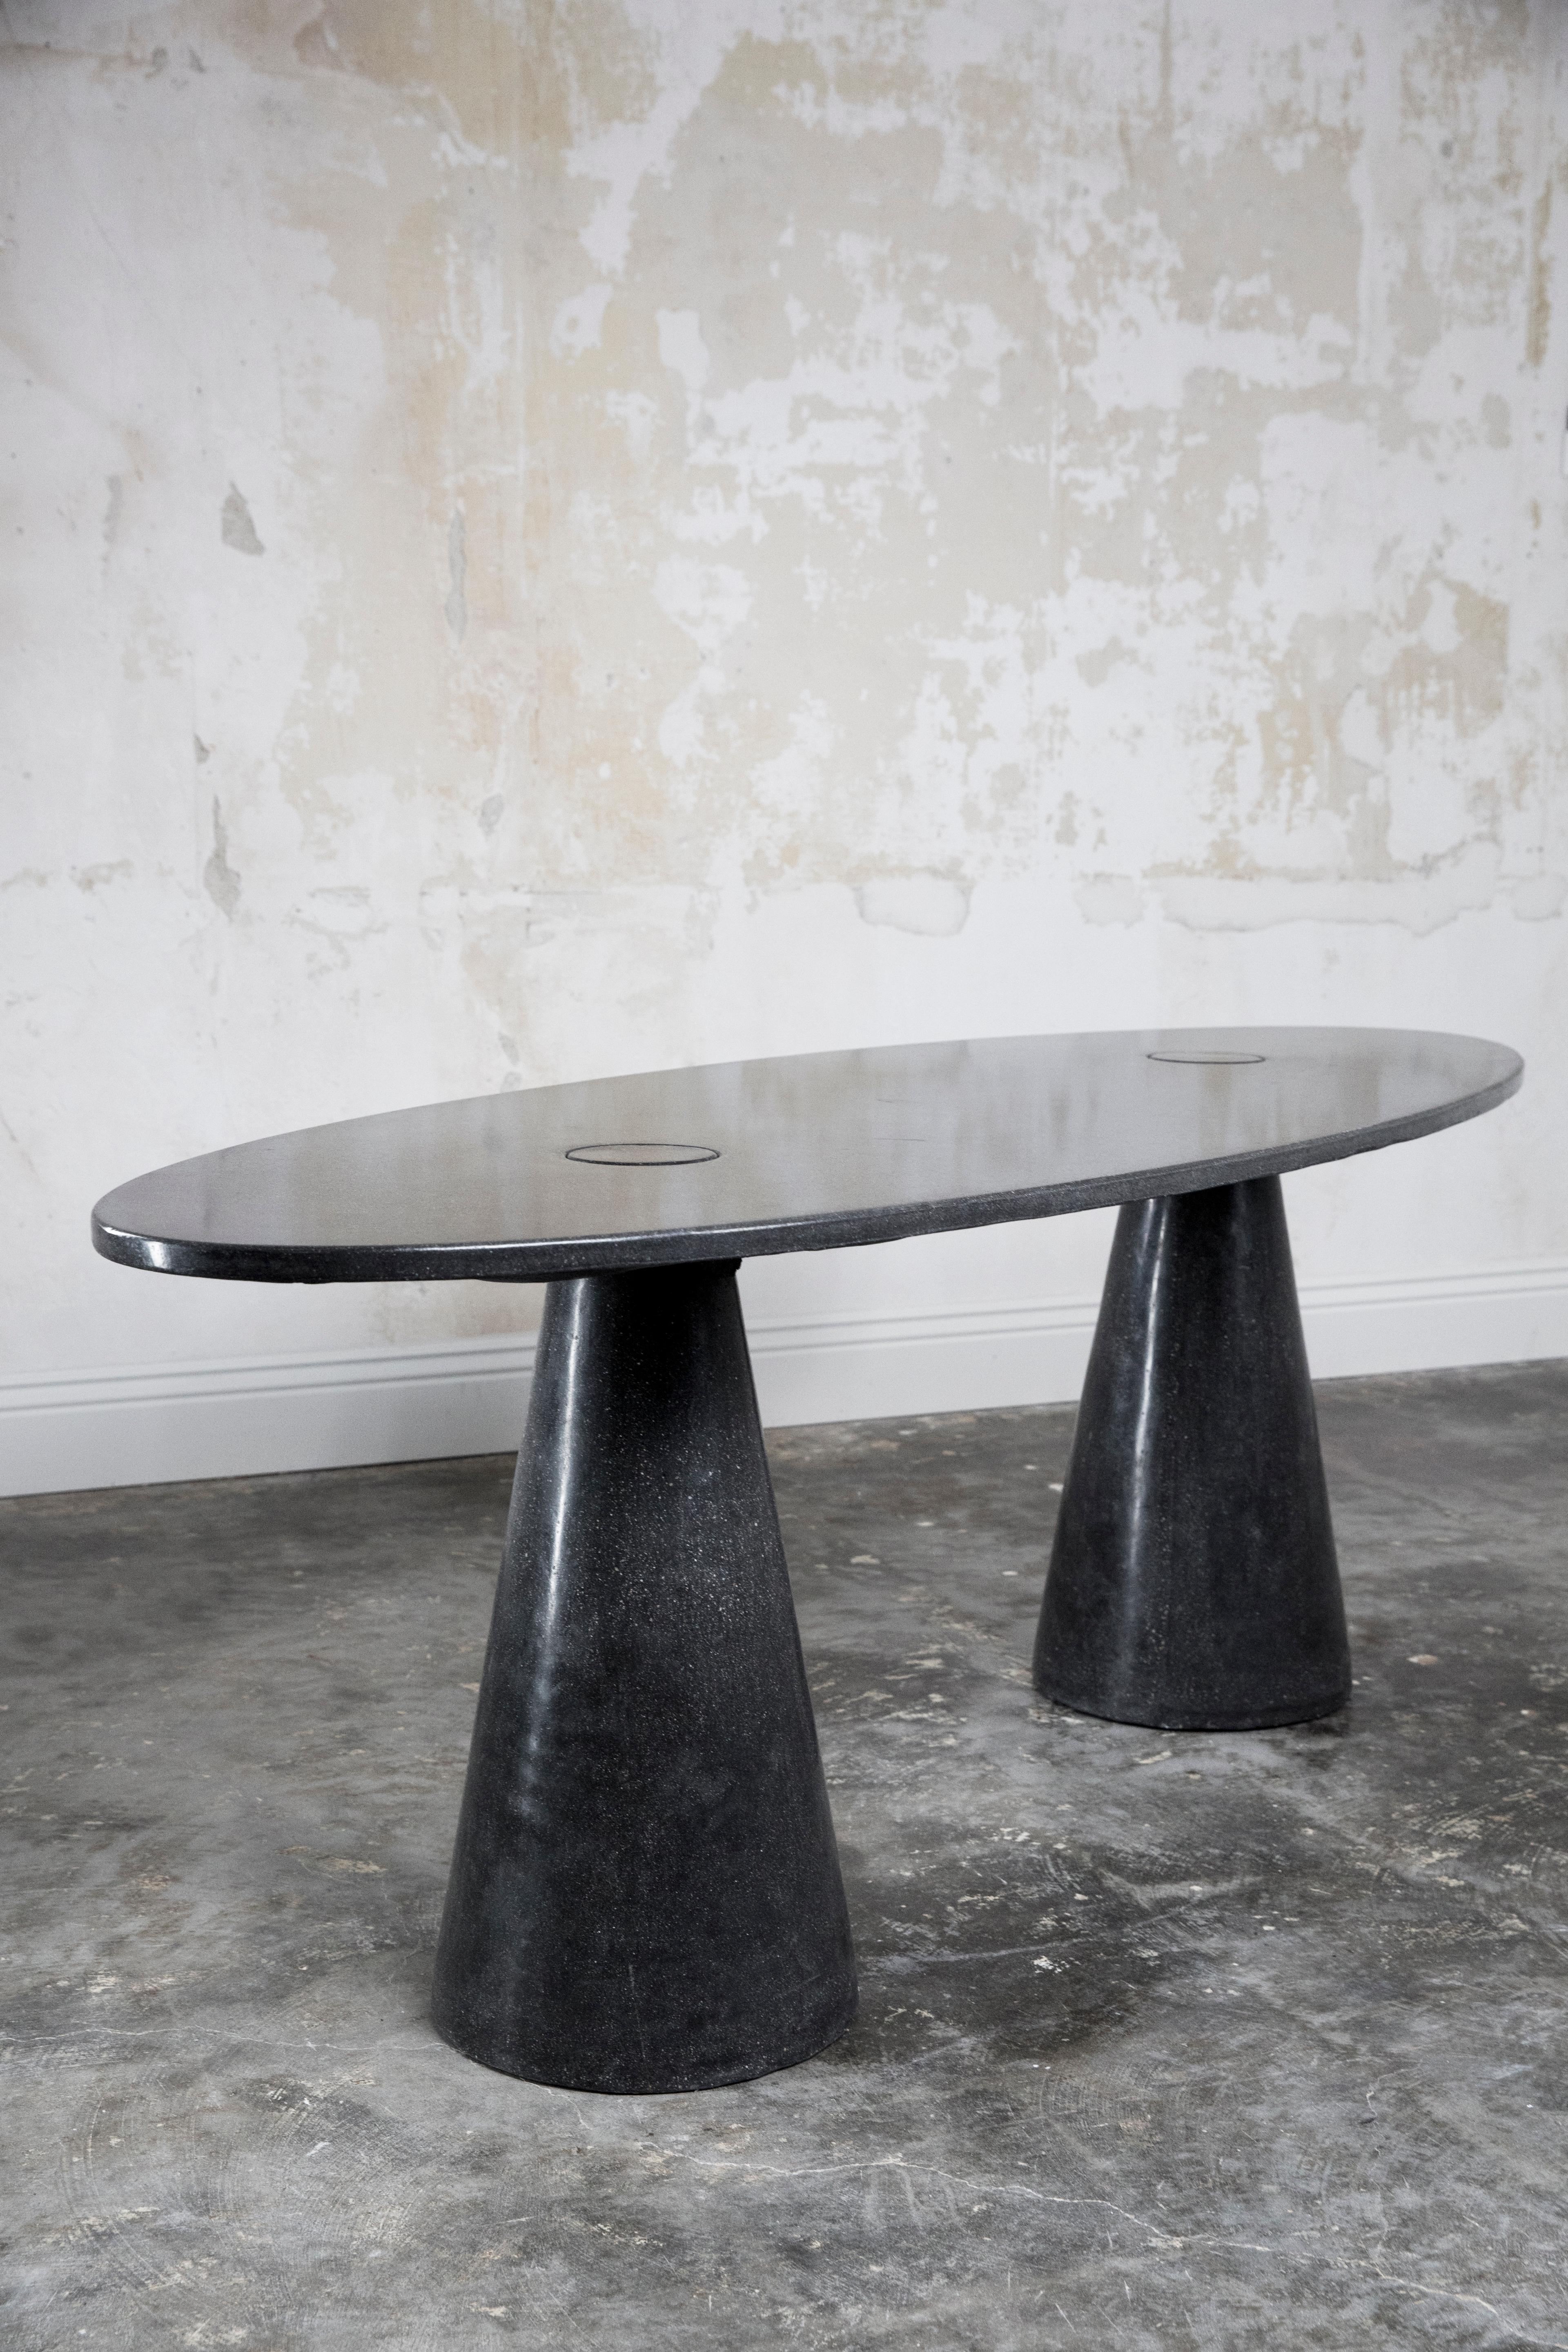 Contemporary James de Wulf Concrete Oval Double Locking Table, 108